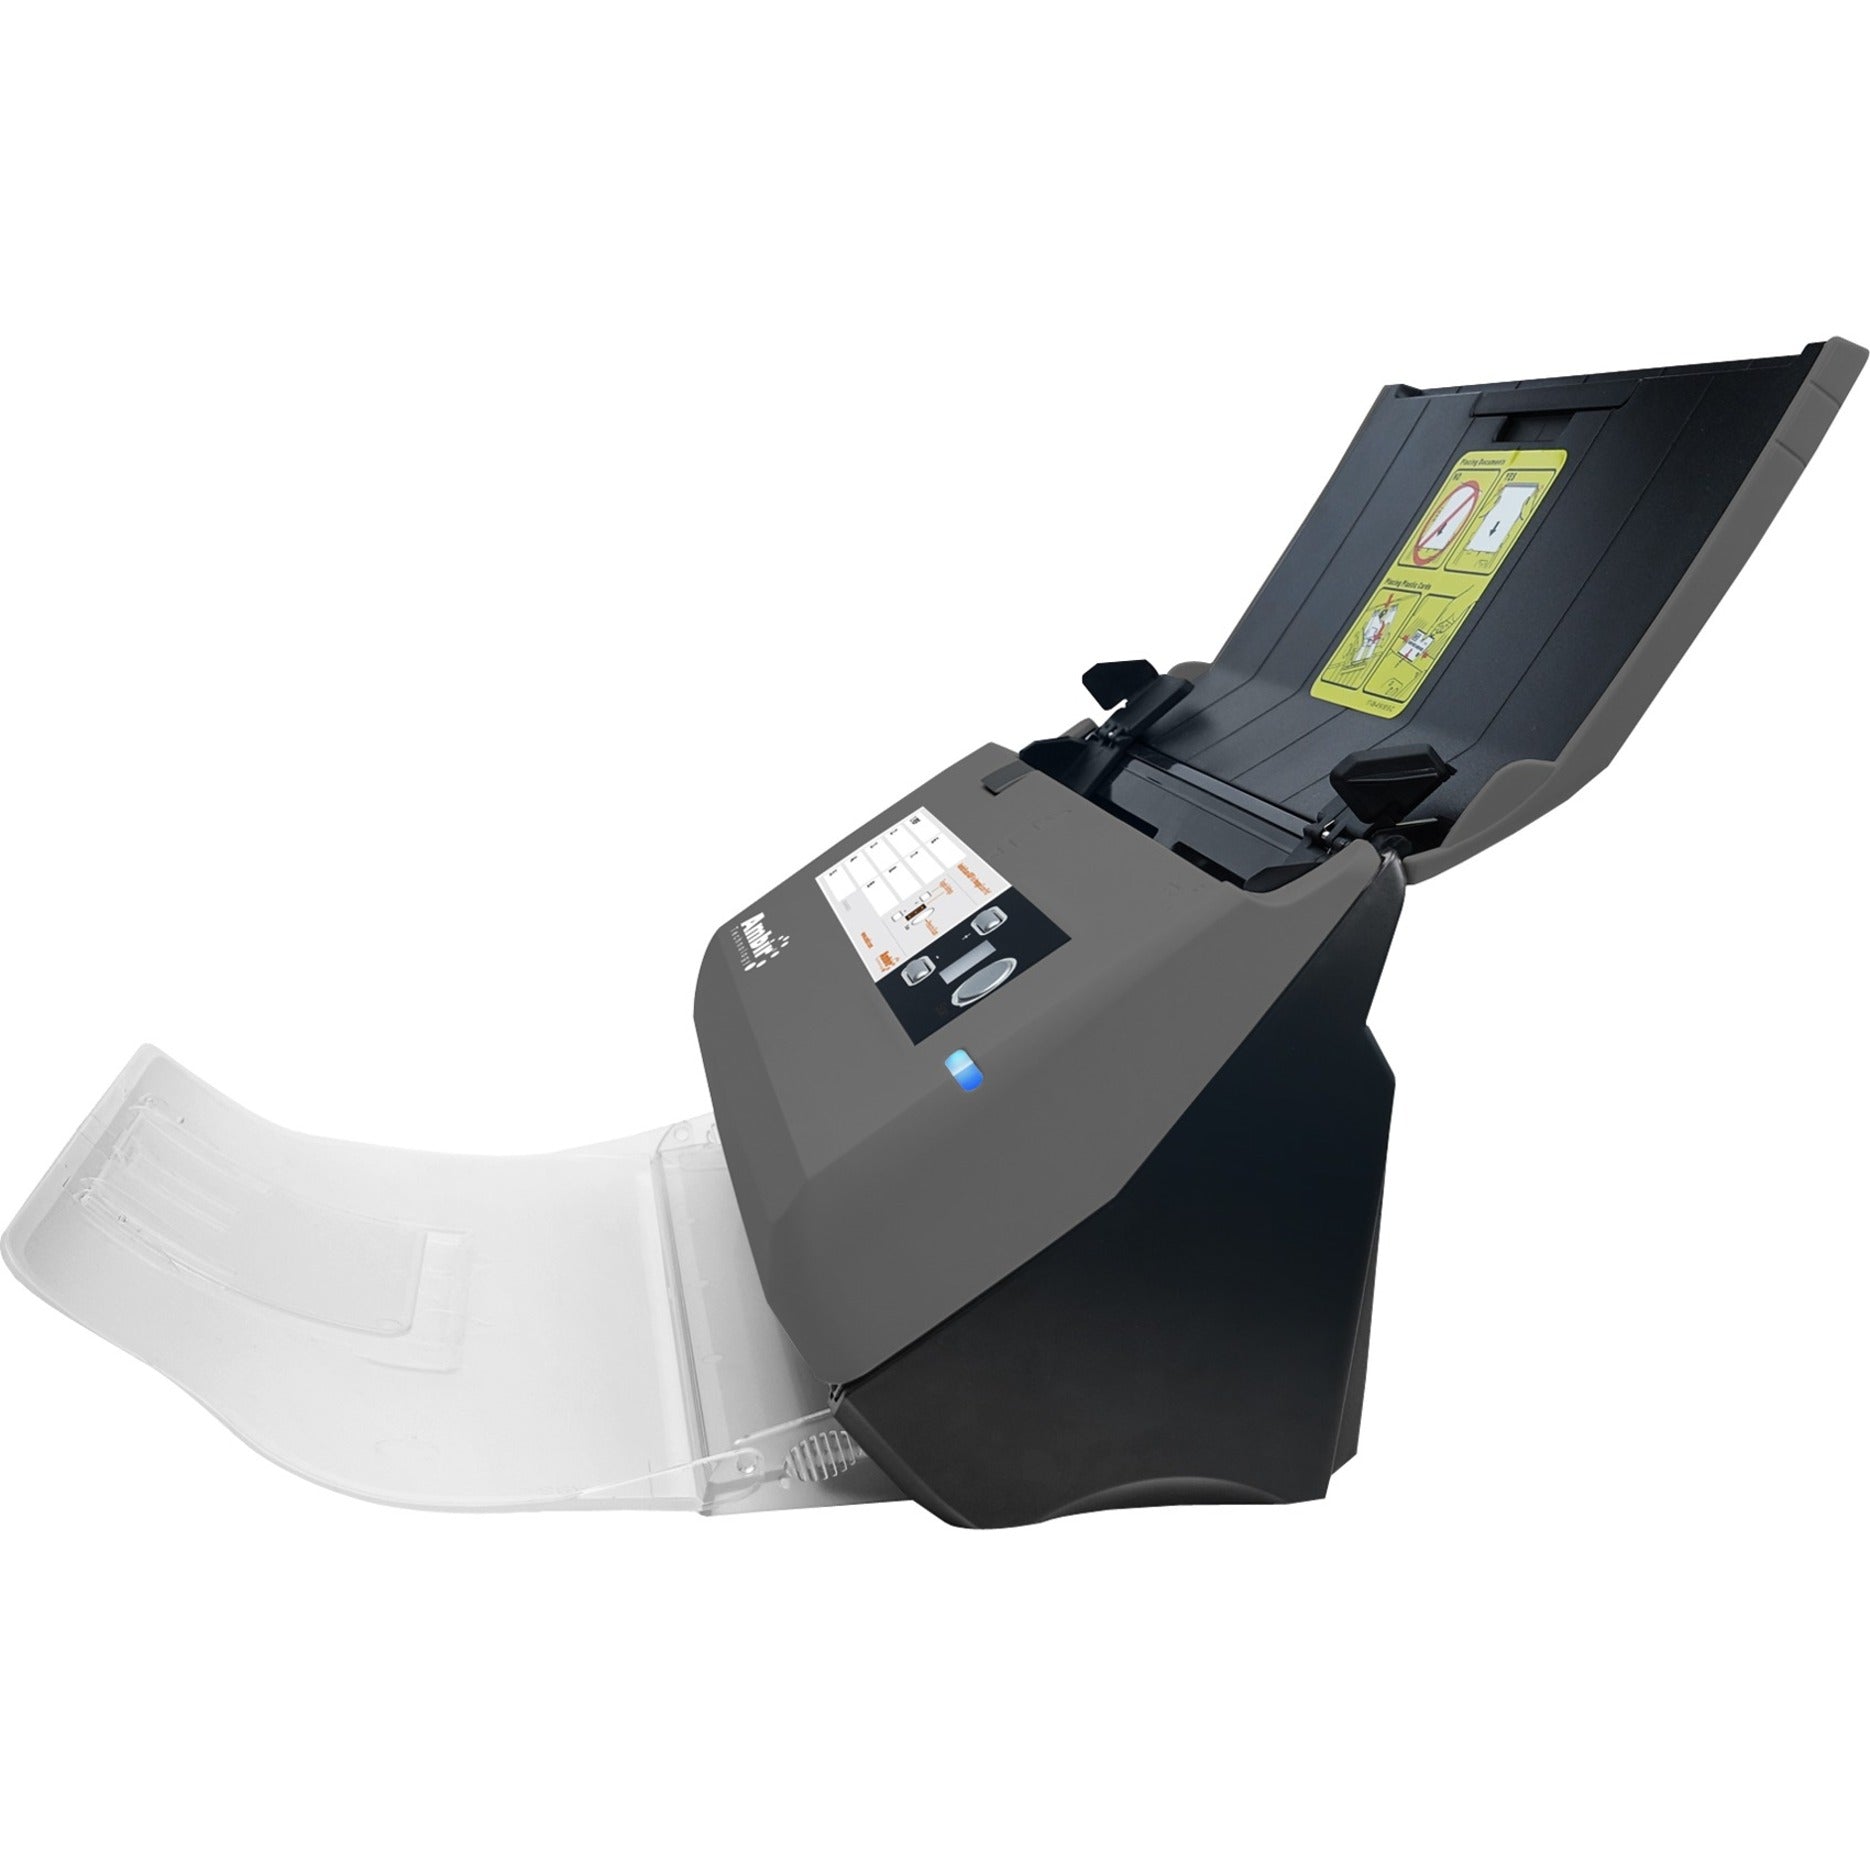 Ambir DS820ix-AS ImageScan Pro 820ix Sheetfed Scanner, Color, Duplex Scanning, 600 dpi Optical Resolution